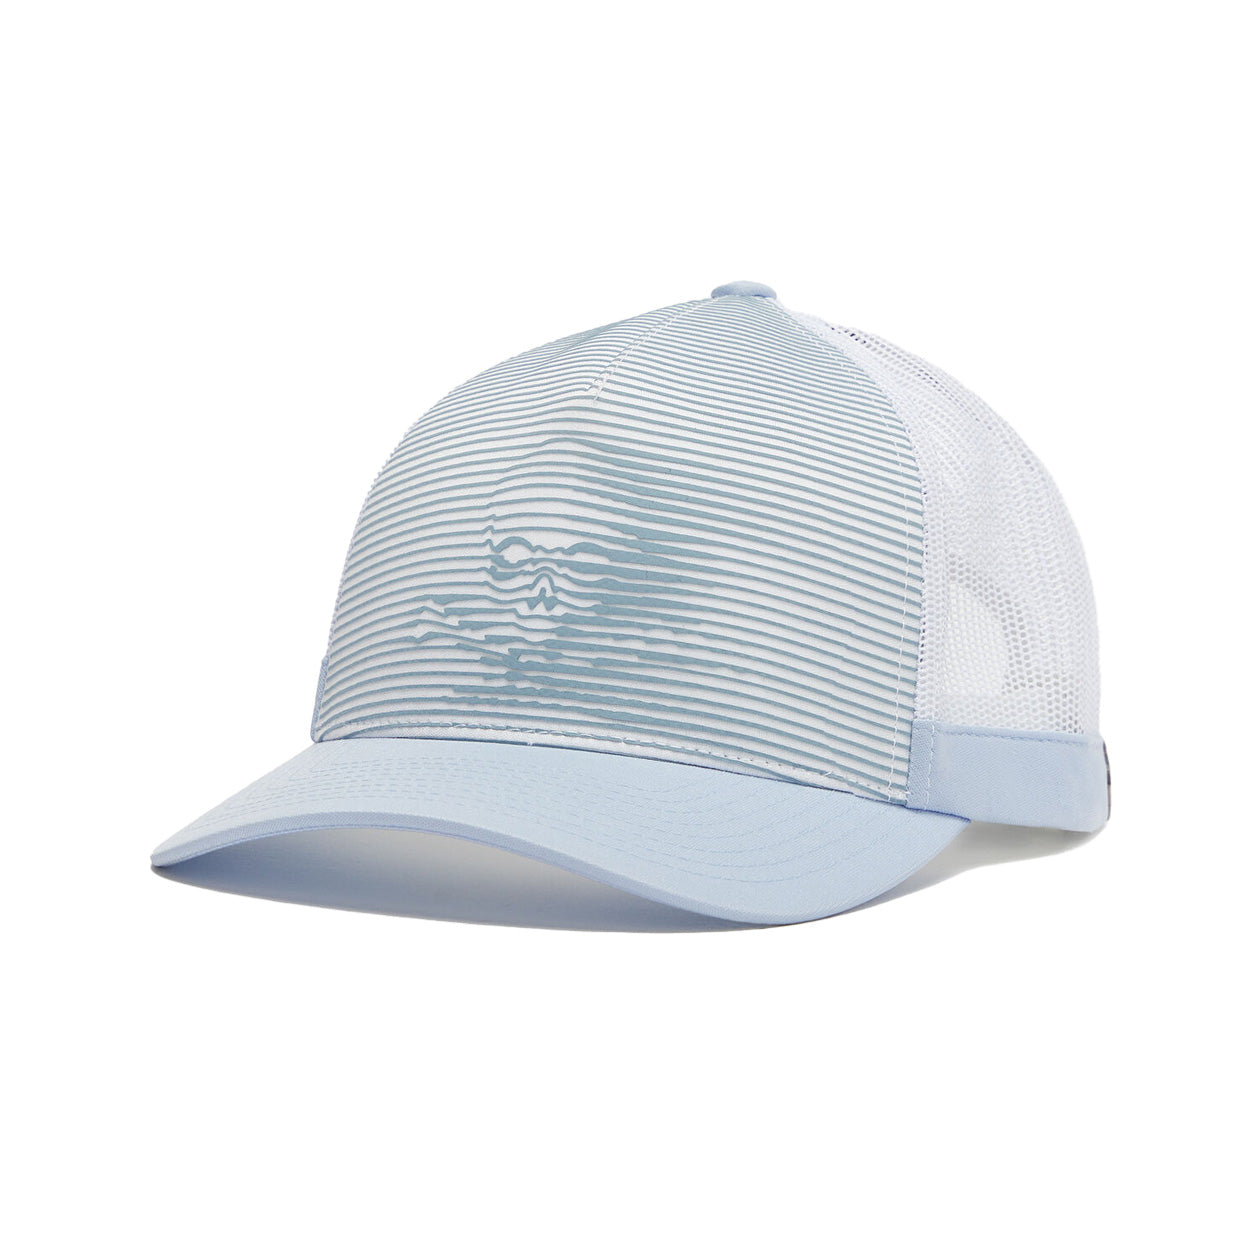 3D SKULL & T'S INTERLOCK KNIT TRUCKER HAT '23 高爾夫球帽